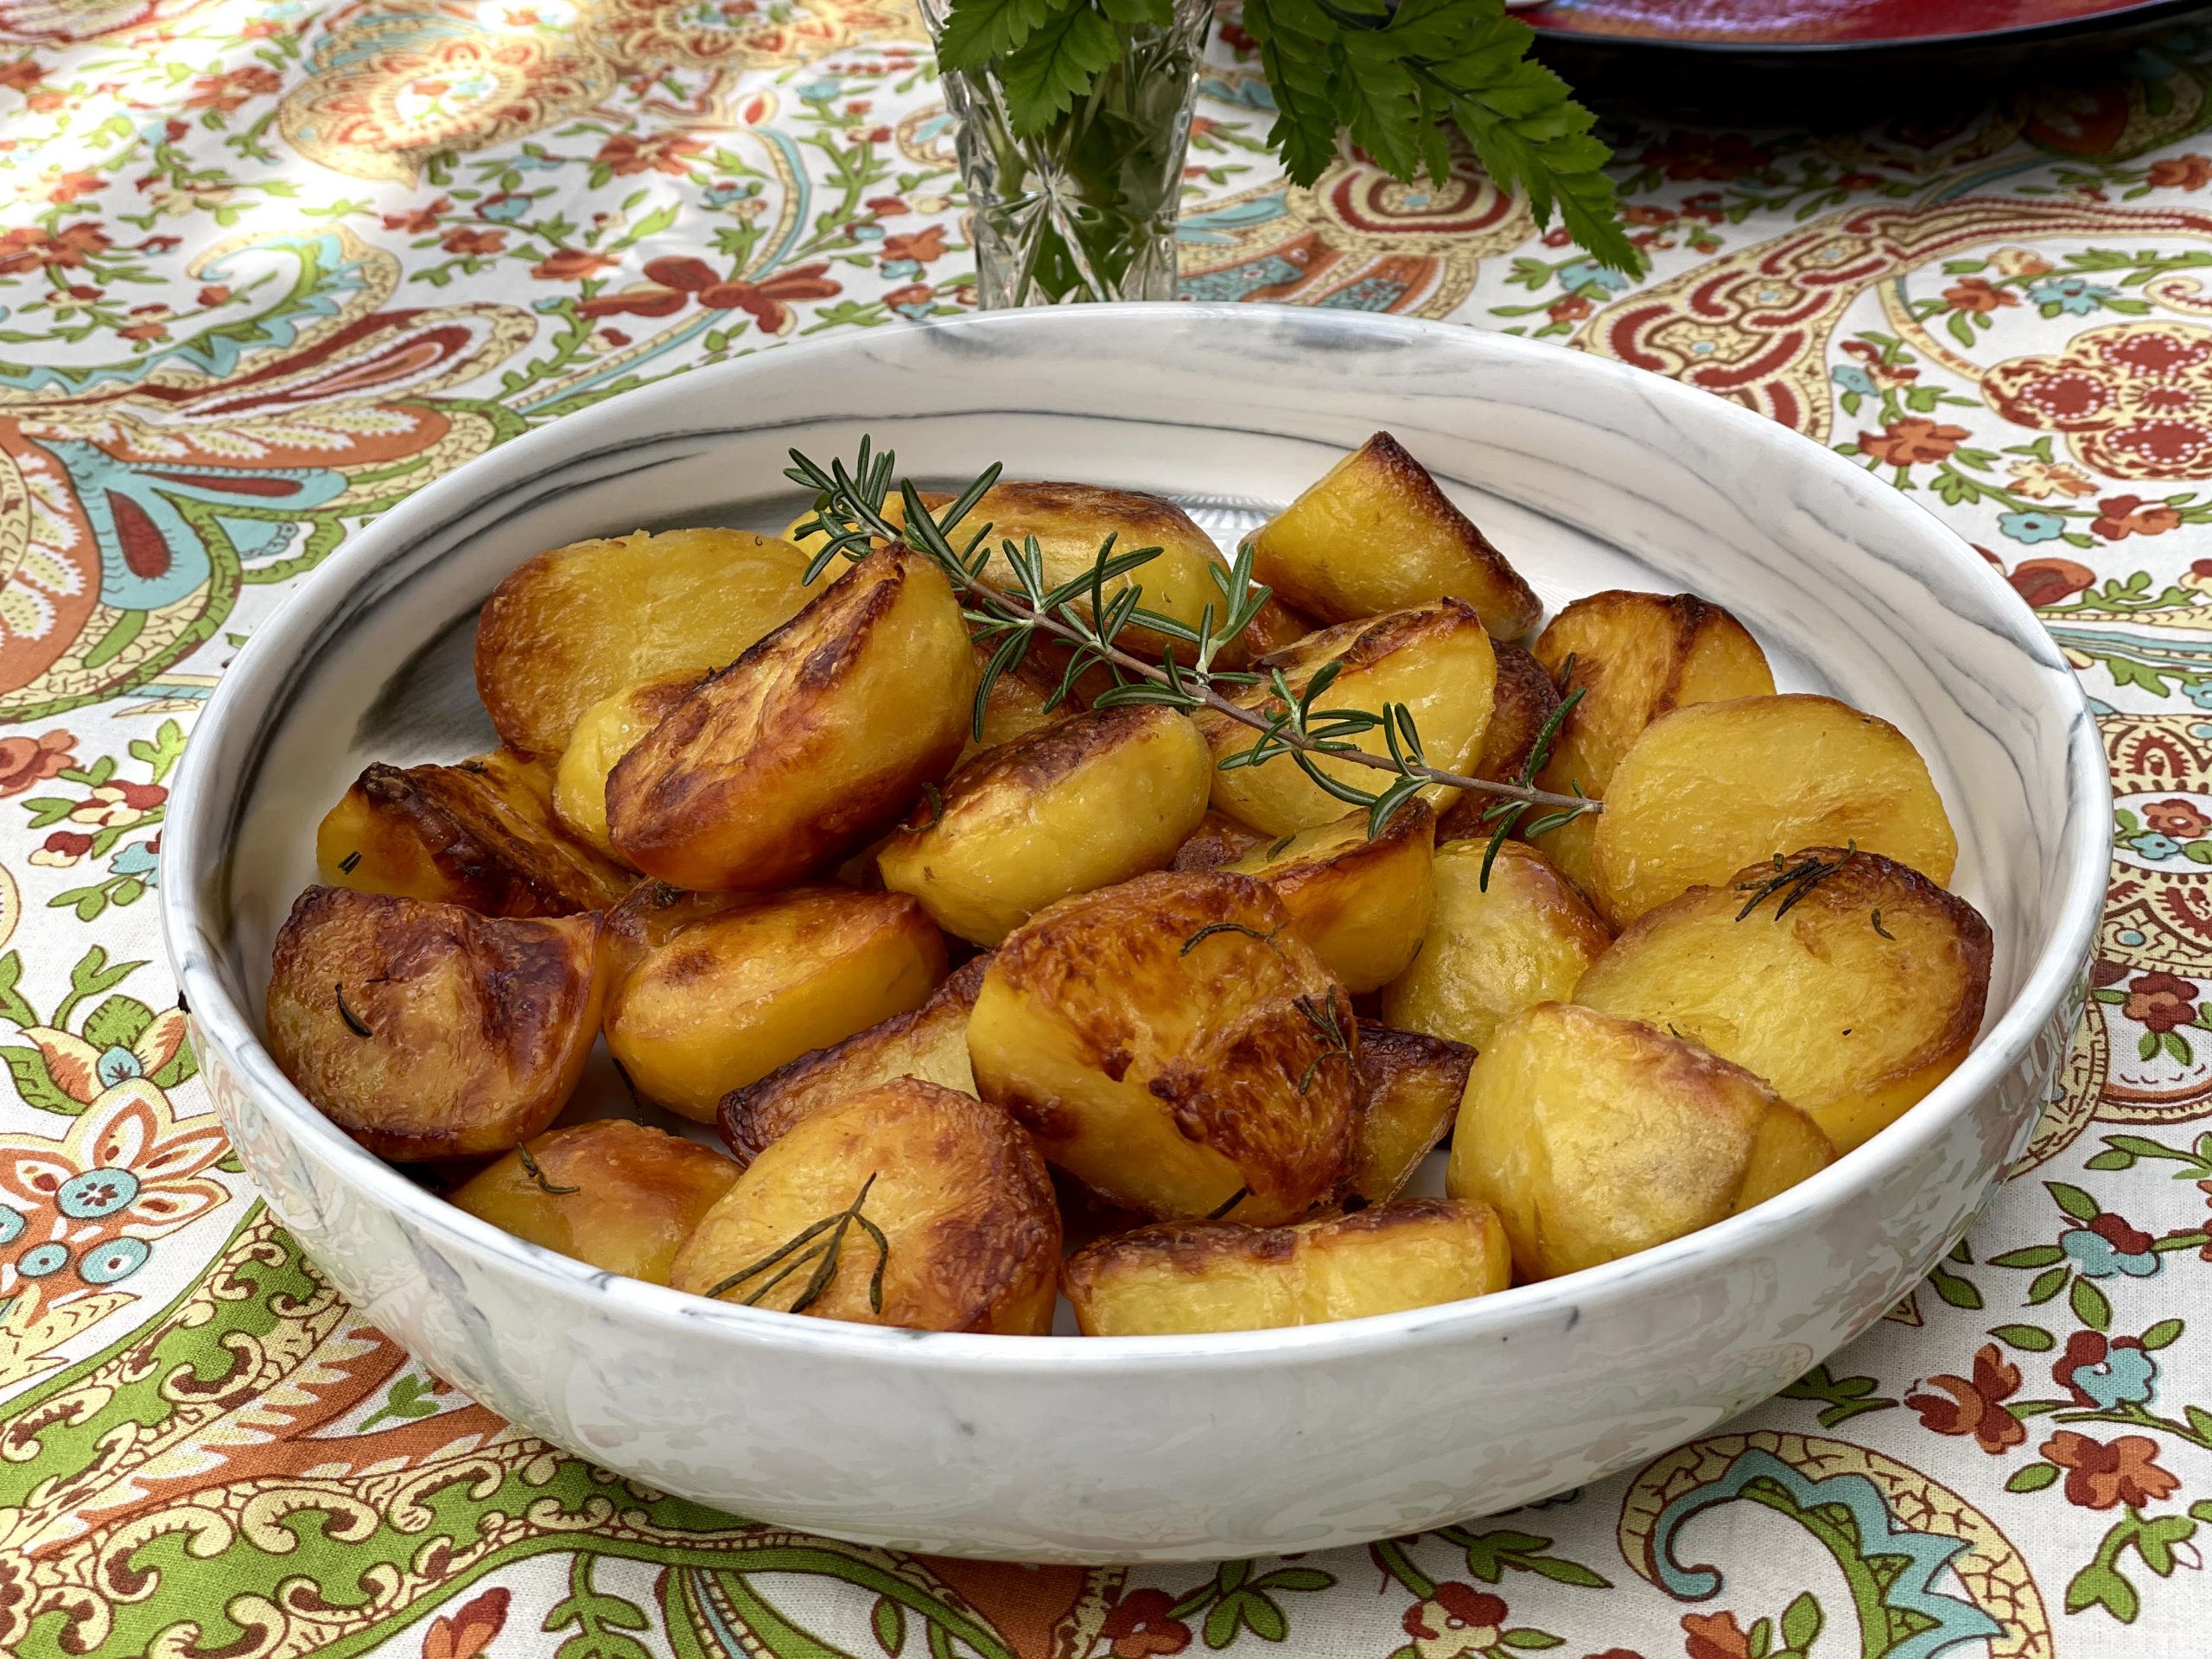 Perfectly roasted rosemary potatoes